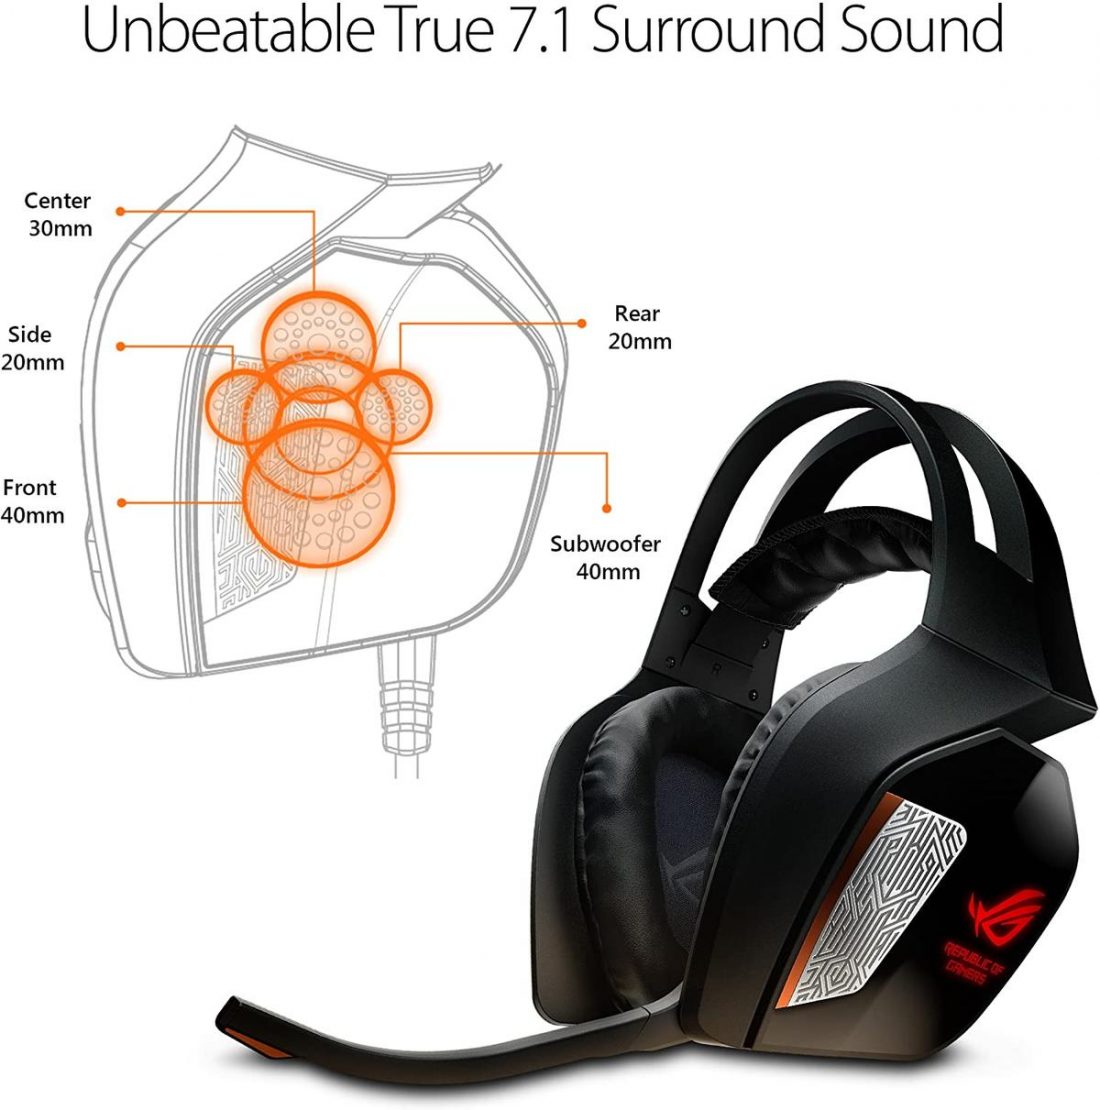 Auriculares ASUS ROG Centurion con verdadero sonido envolvente 7.1 para juegos (De: Amazon)